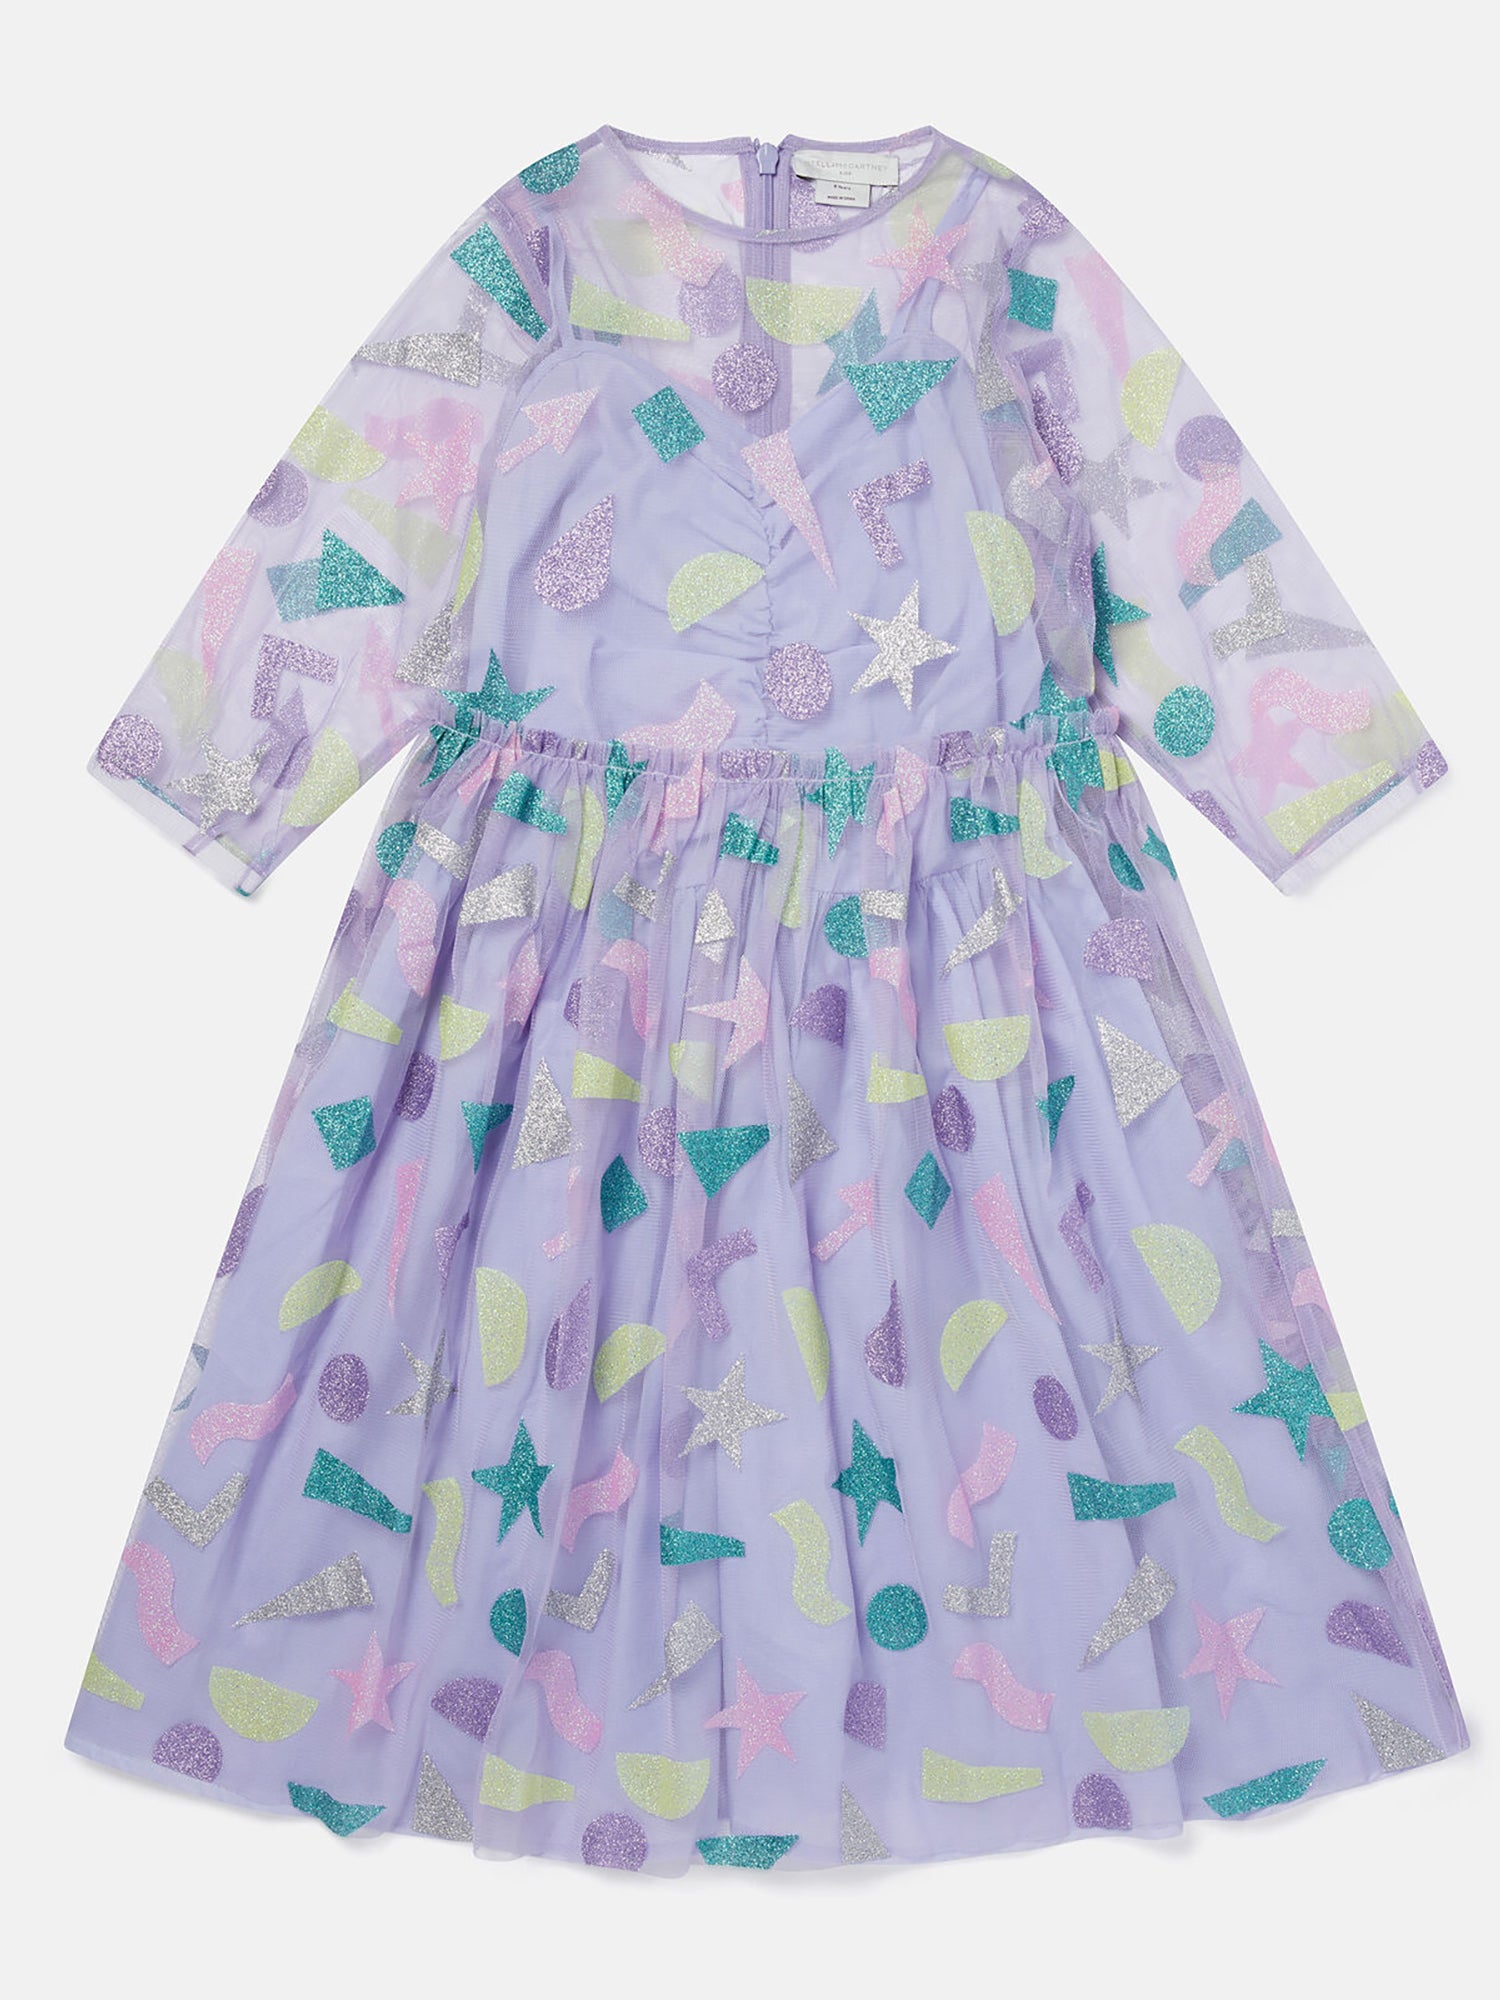 Stella McCartney Glitter Patch Tulle Dress - Dresses